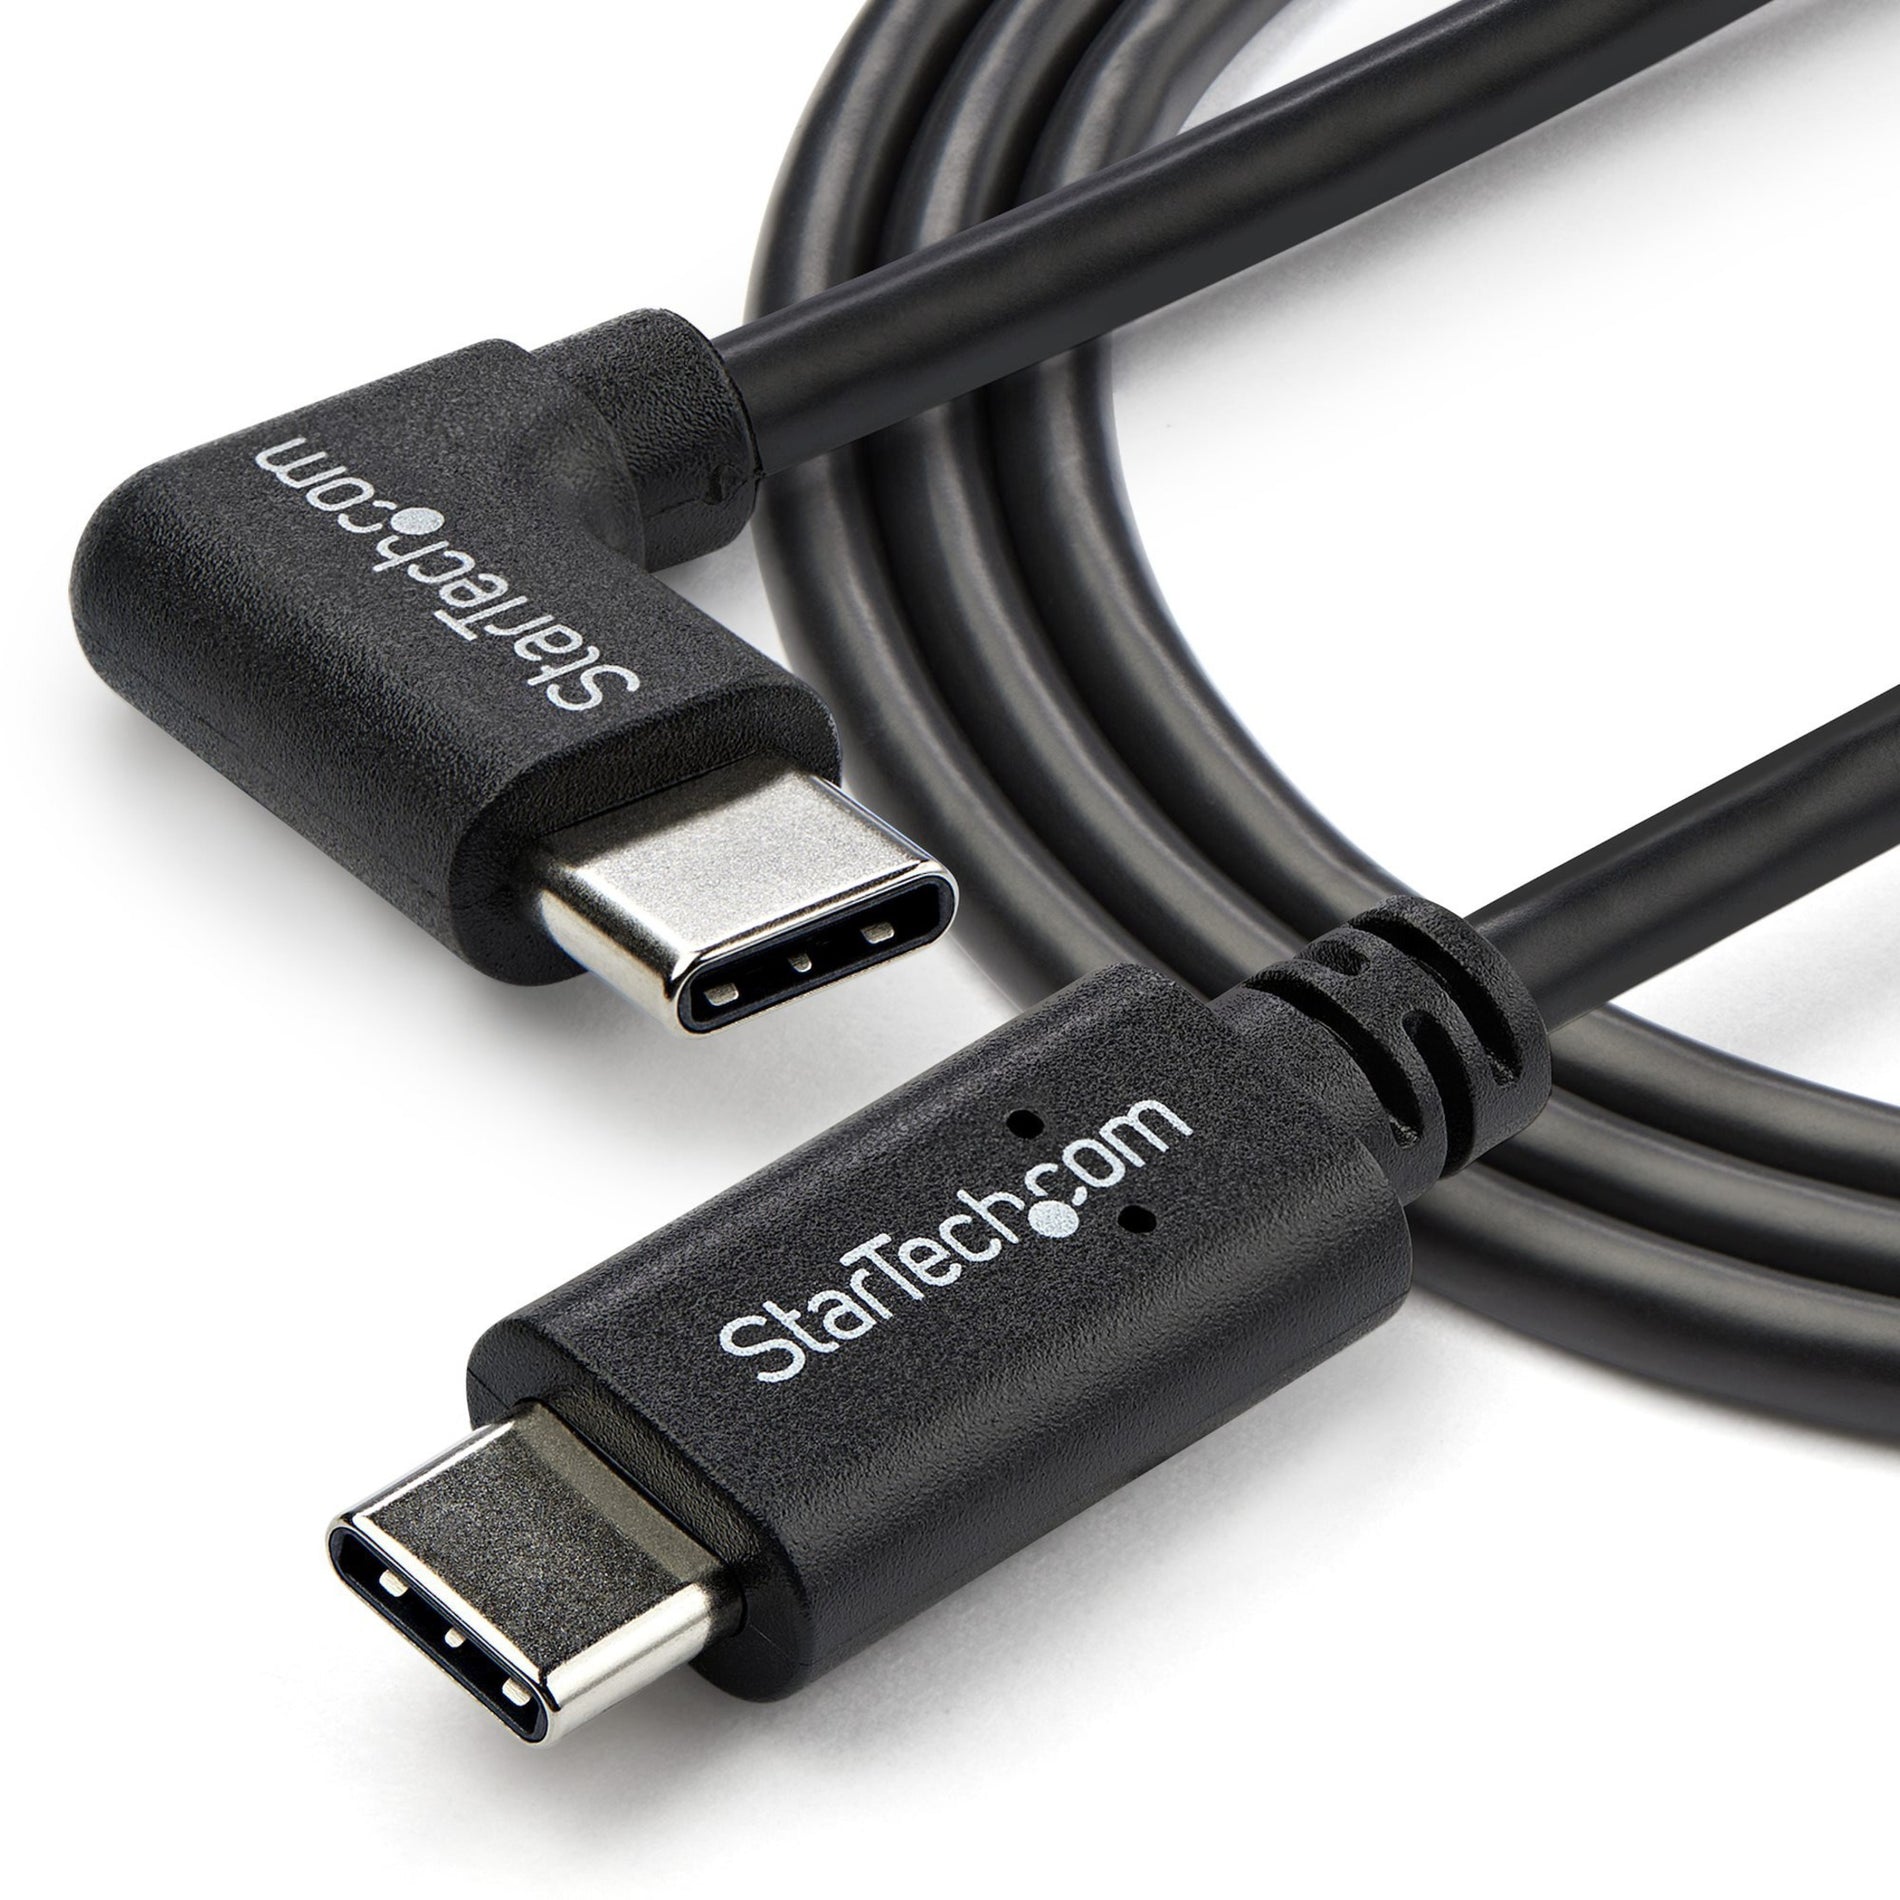 StarTech.com USB2CC1MR Right-Angle USB-C Cable - M/M - 1m (3 ft.), USB Type C Cable, 90 degree USB-C Cable, USB C to USB C Cable, USB-C Charge Cable